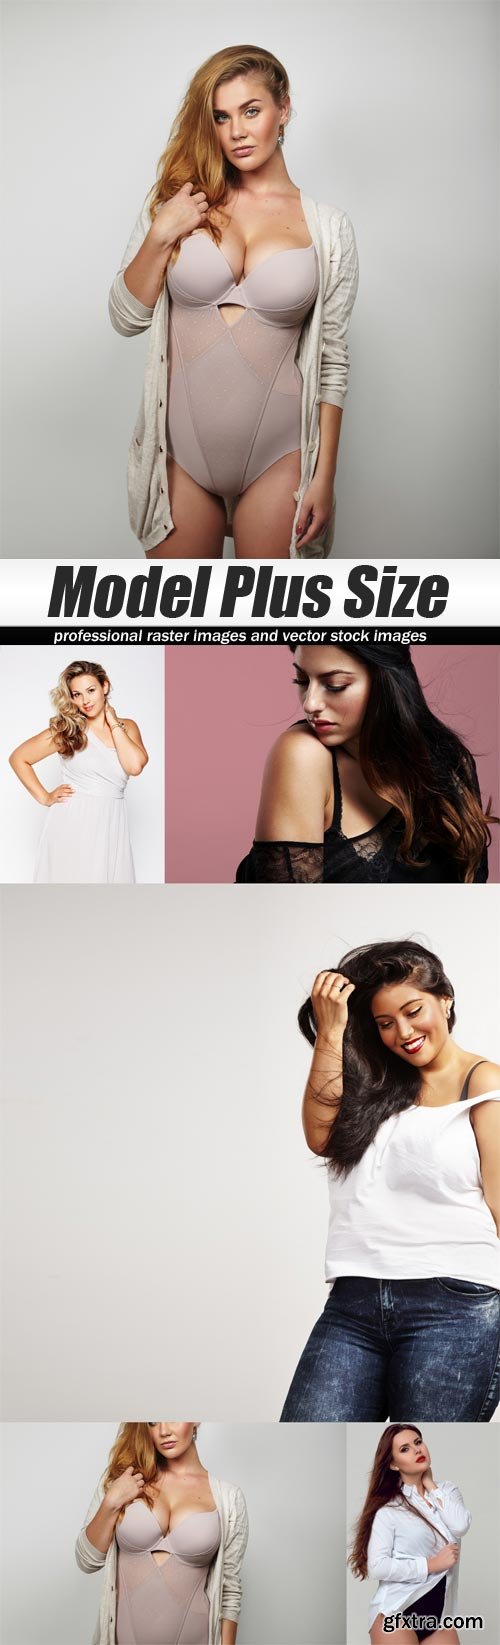 Model Plus Size